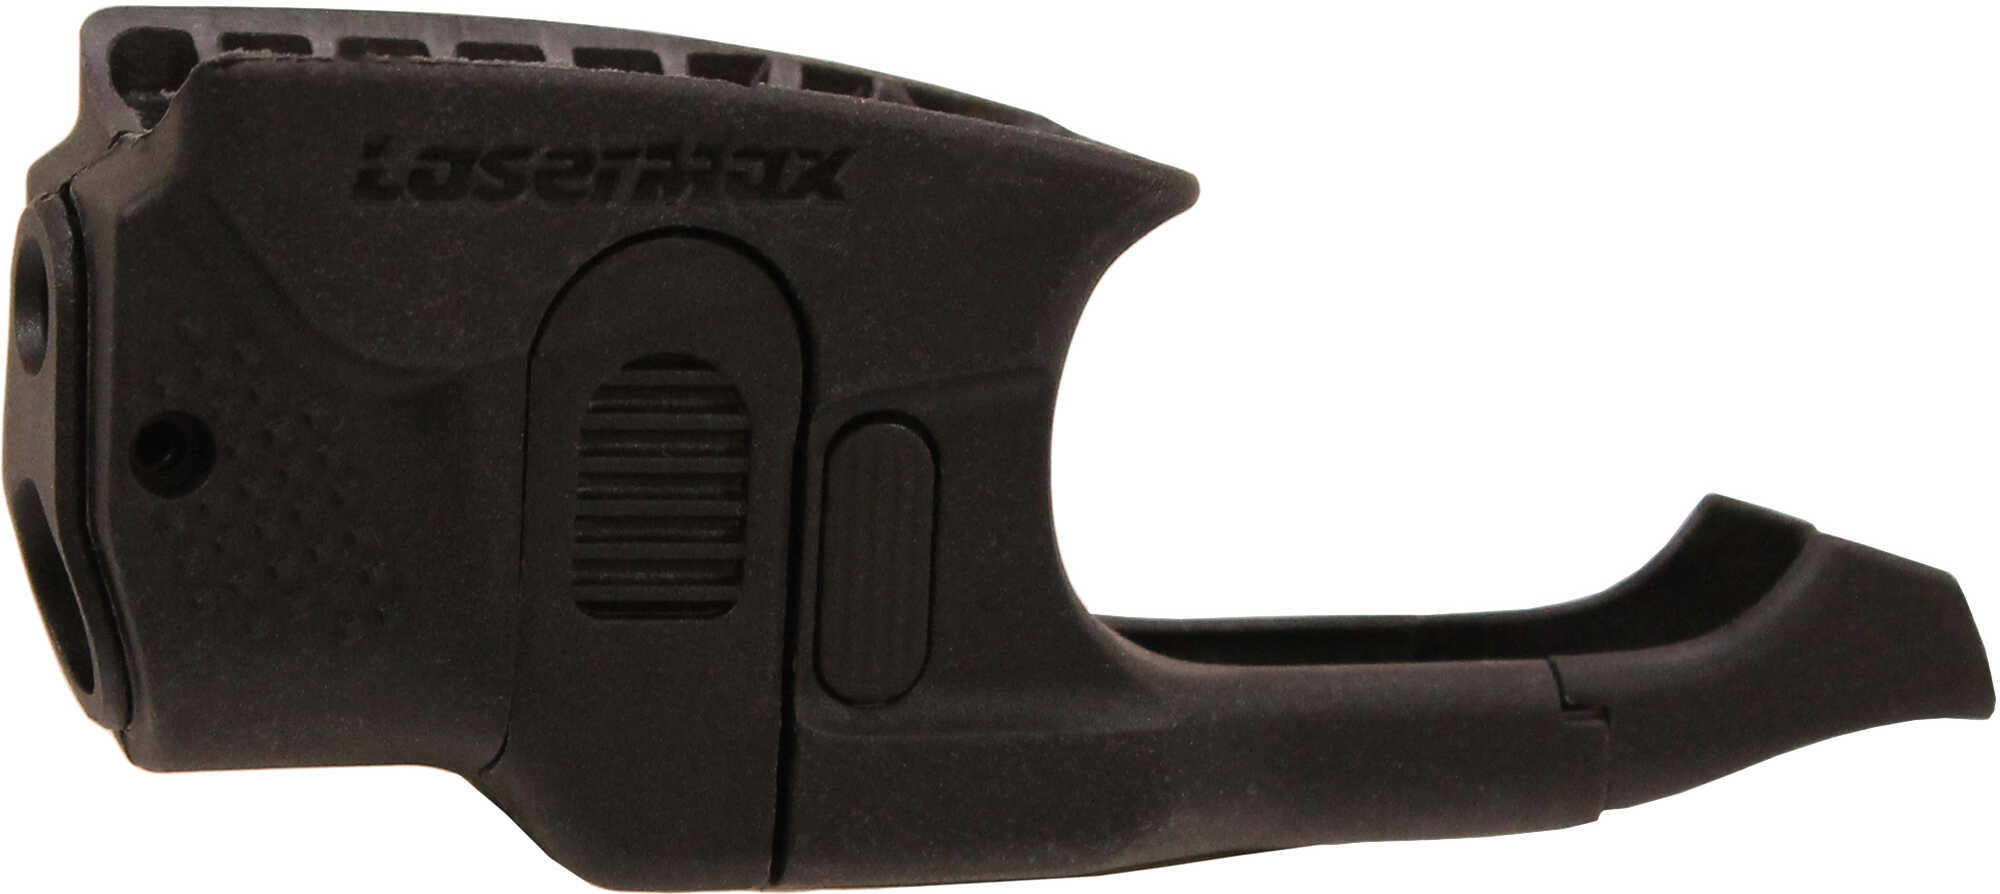 Lasermax Centerfire Light & w/GripSense For Glock 42/43 - Green